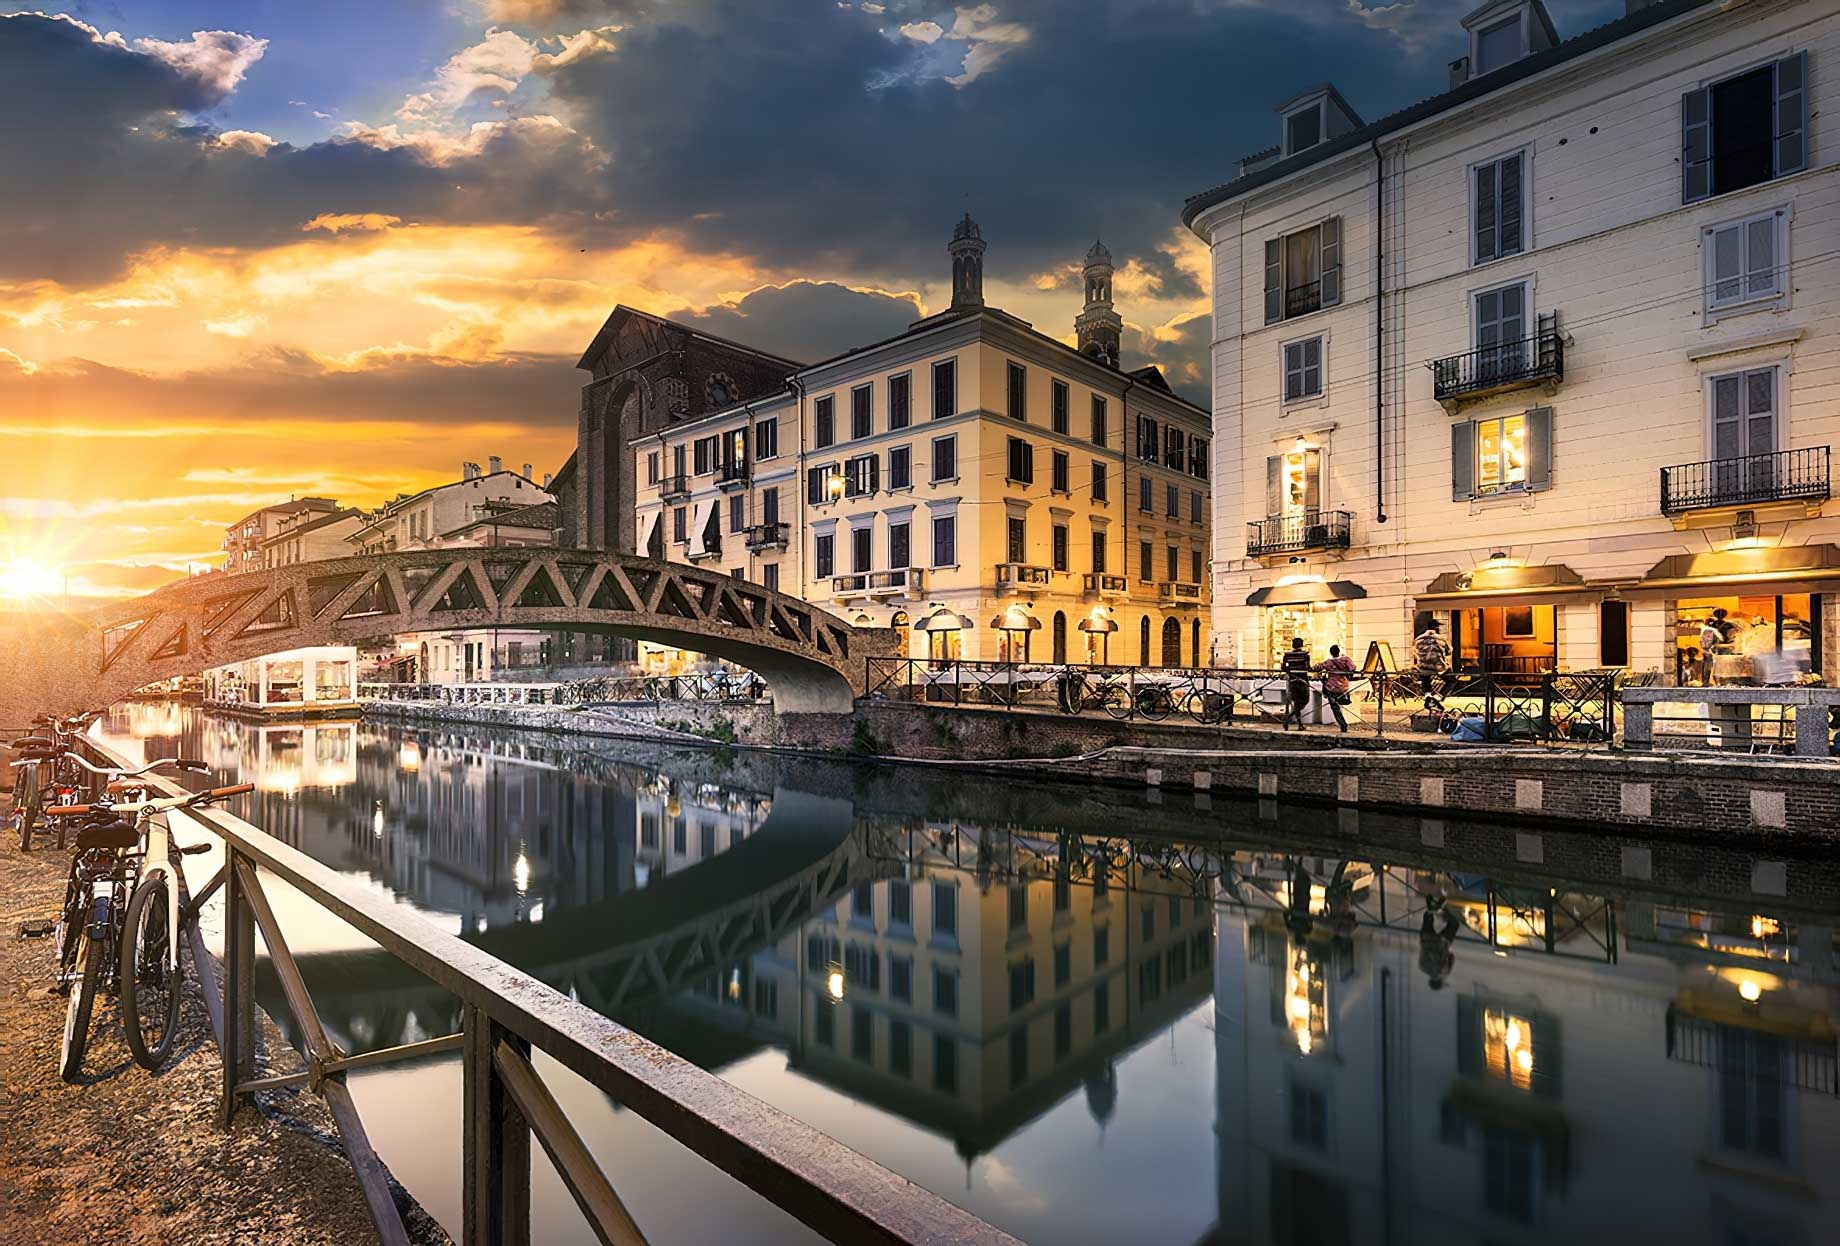 149 – Armani Hotel Milano – Milan, Italy – Bridge Across the Naviglio Grande Canal Sunset